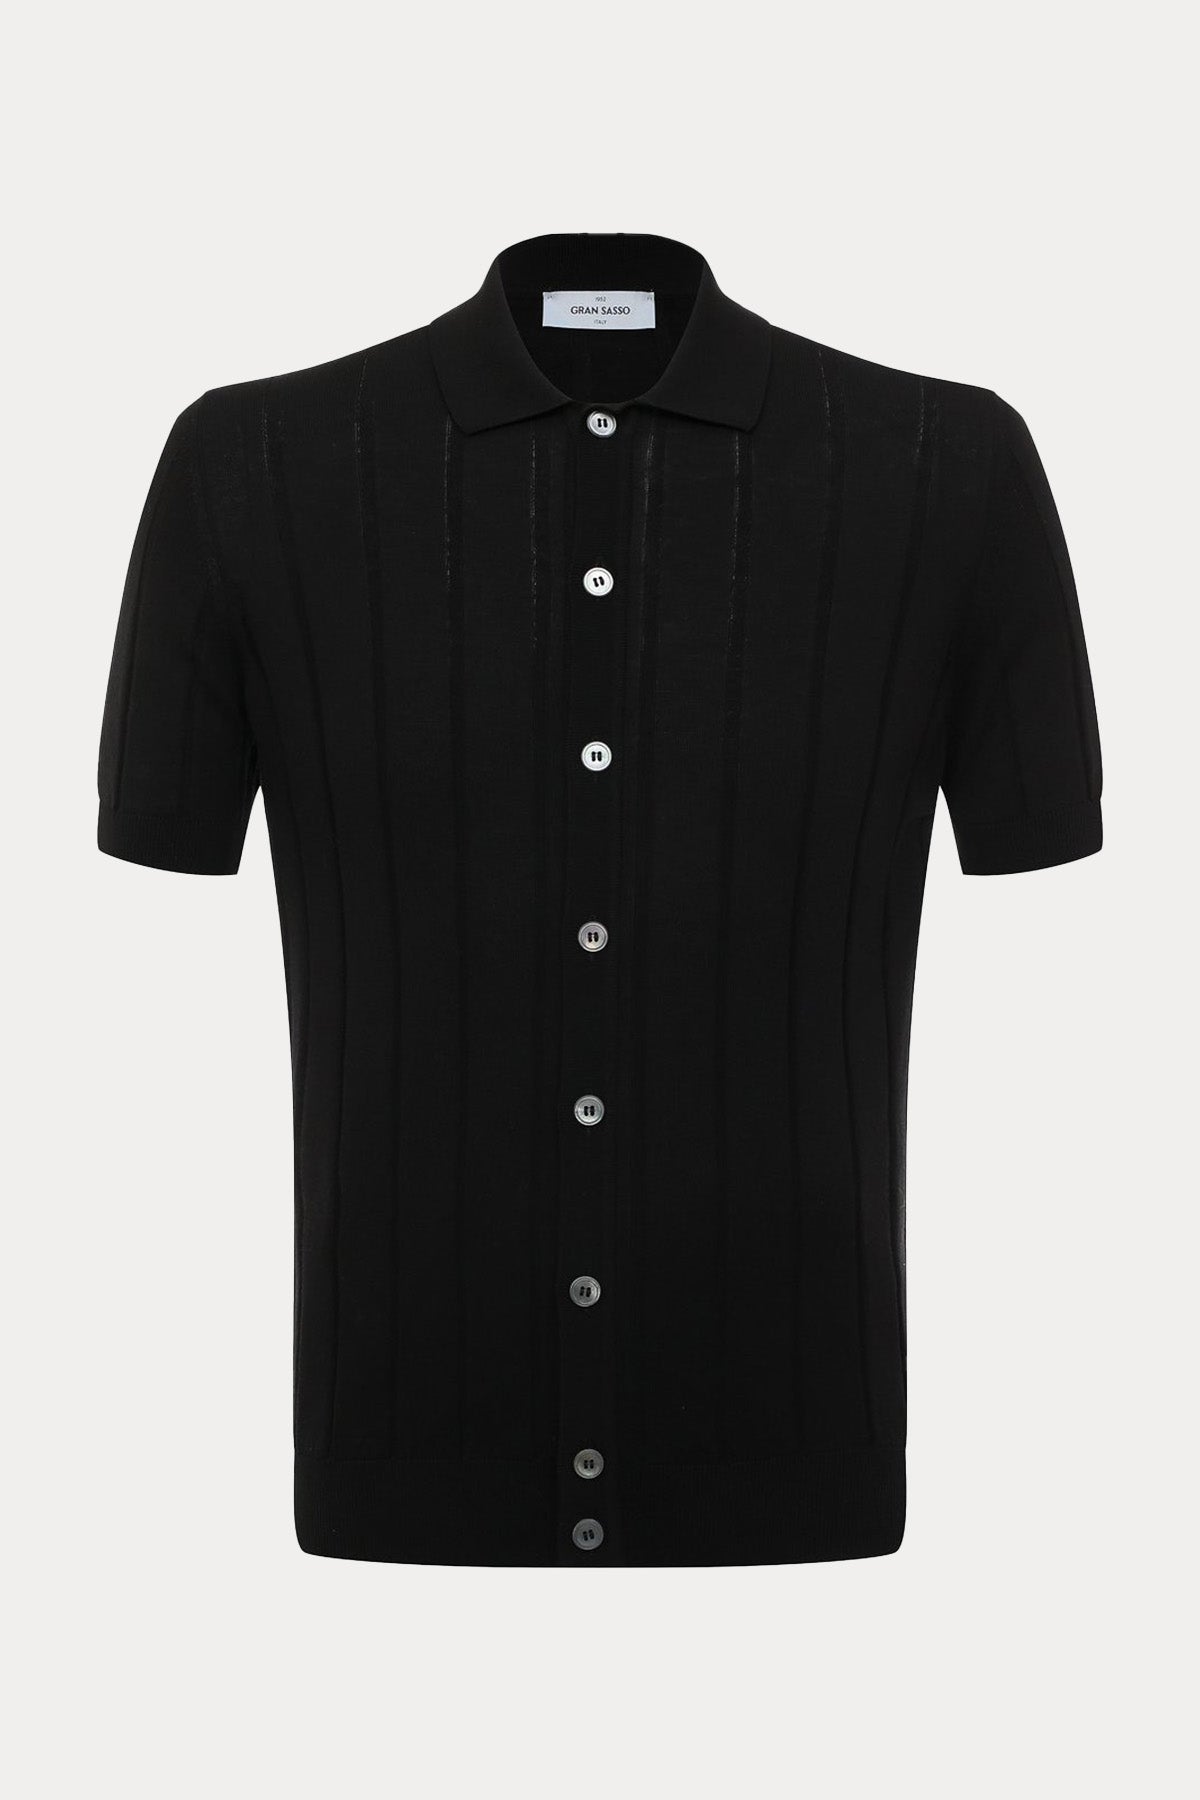 Gran Sasso Düğmeli Örgü Triko Gömlek-Libas Trendy Fashion Store